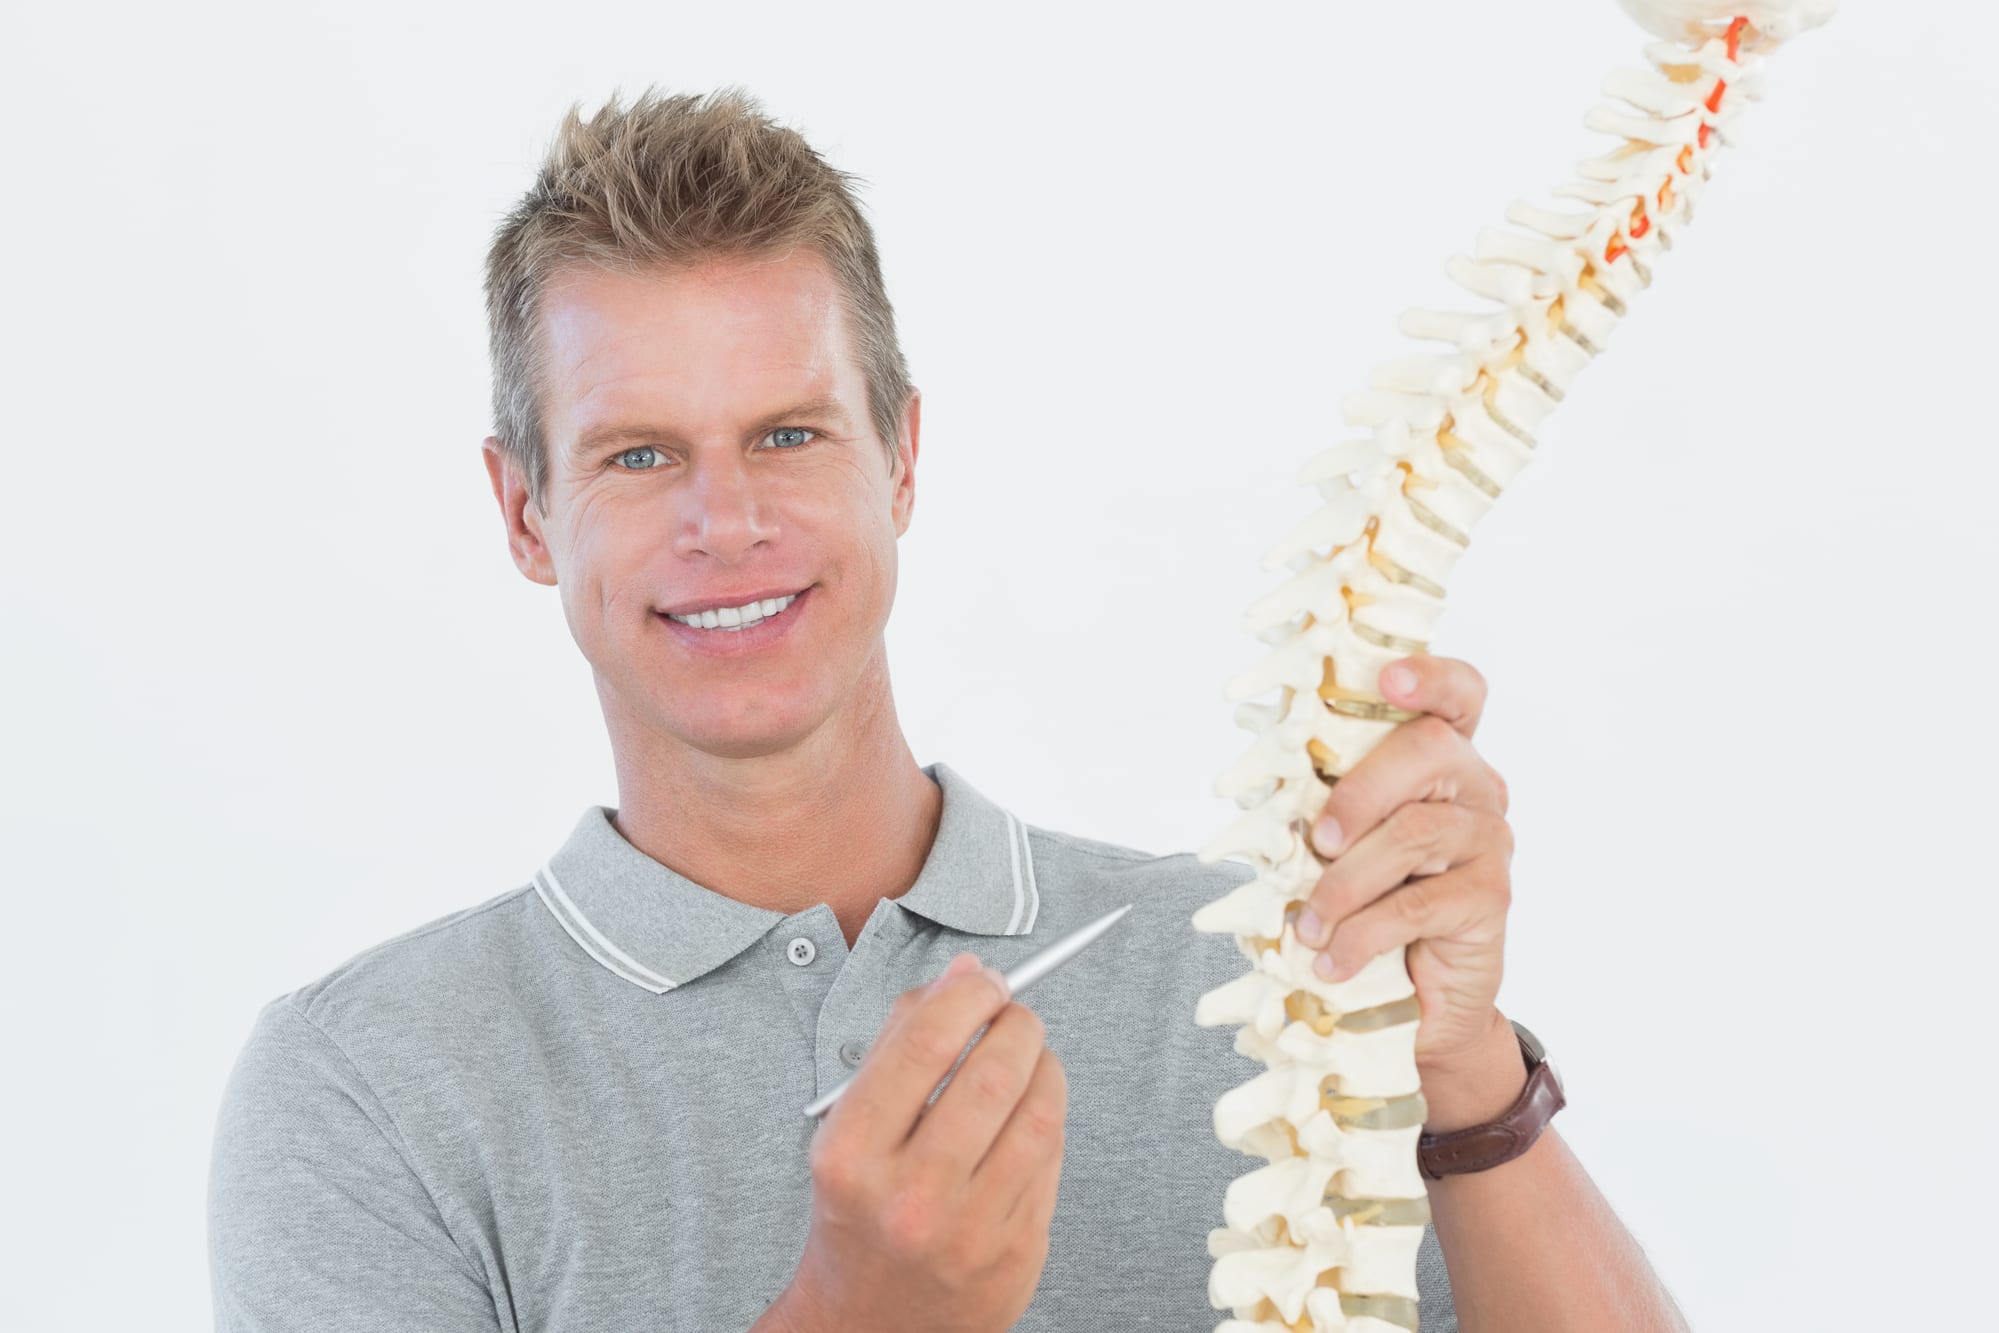 A medical professional displays a spine model